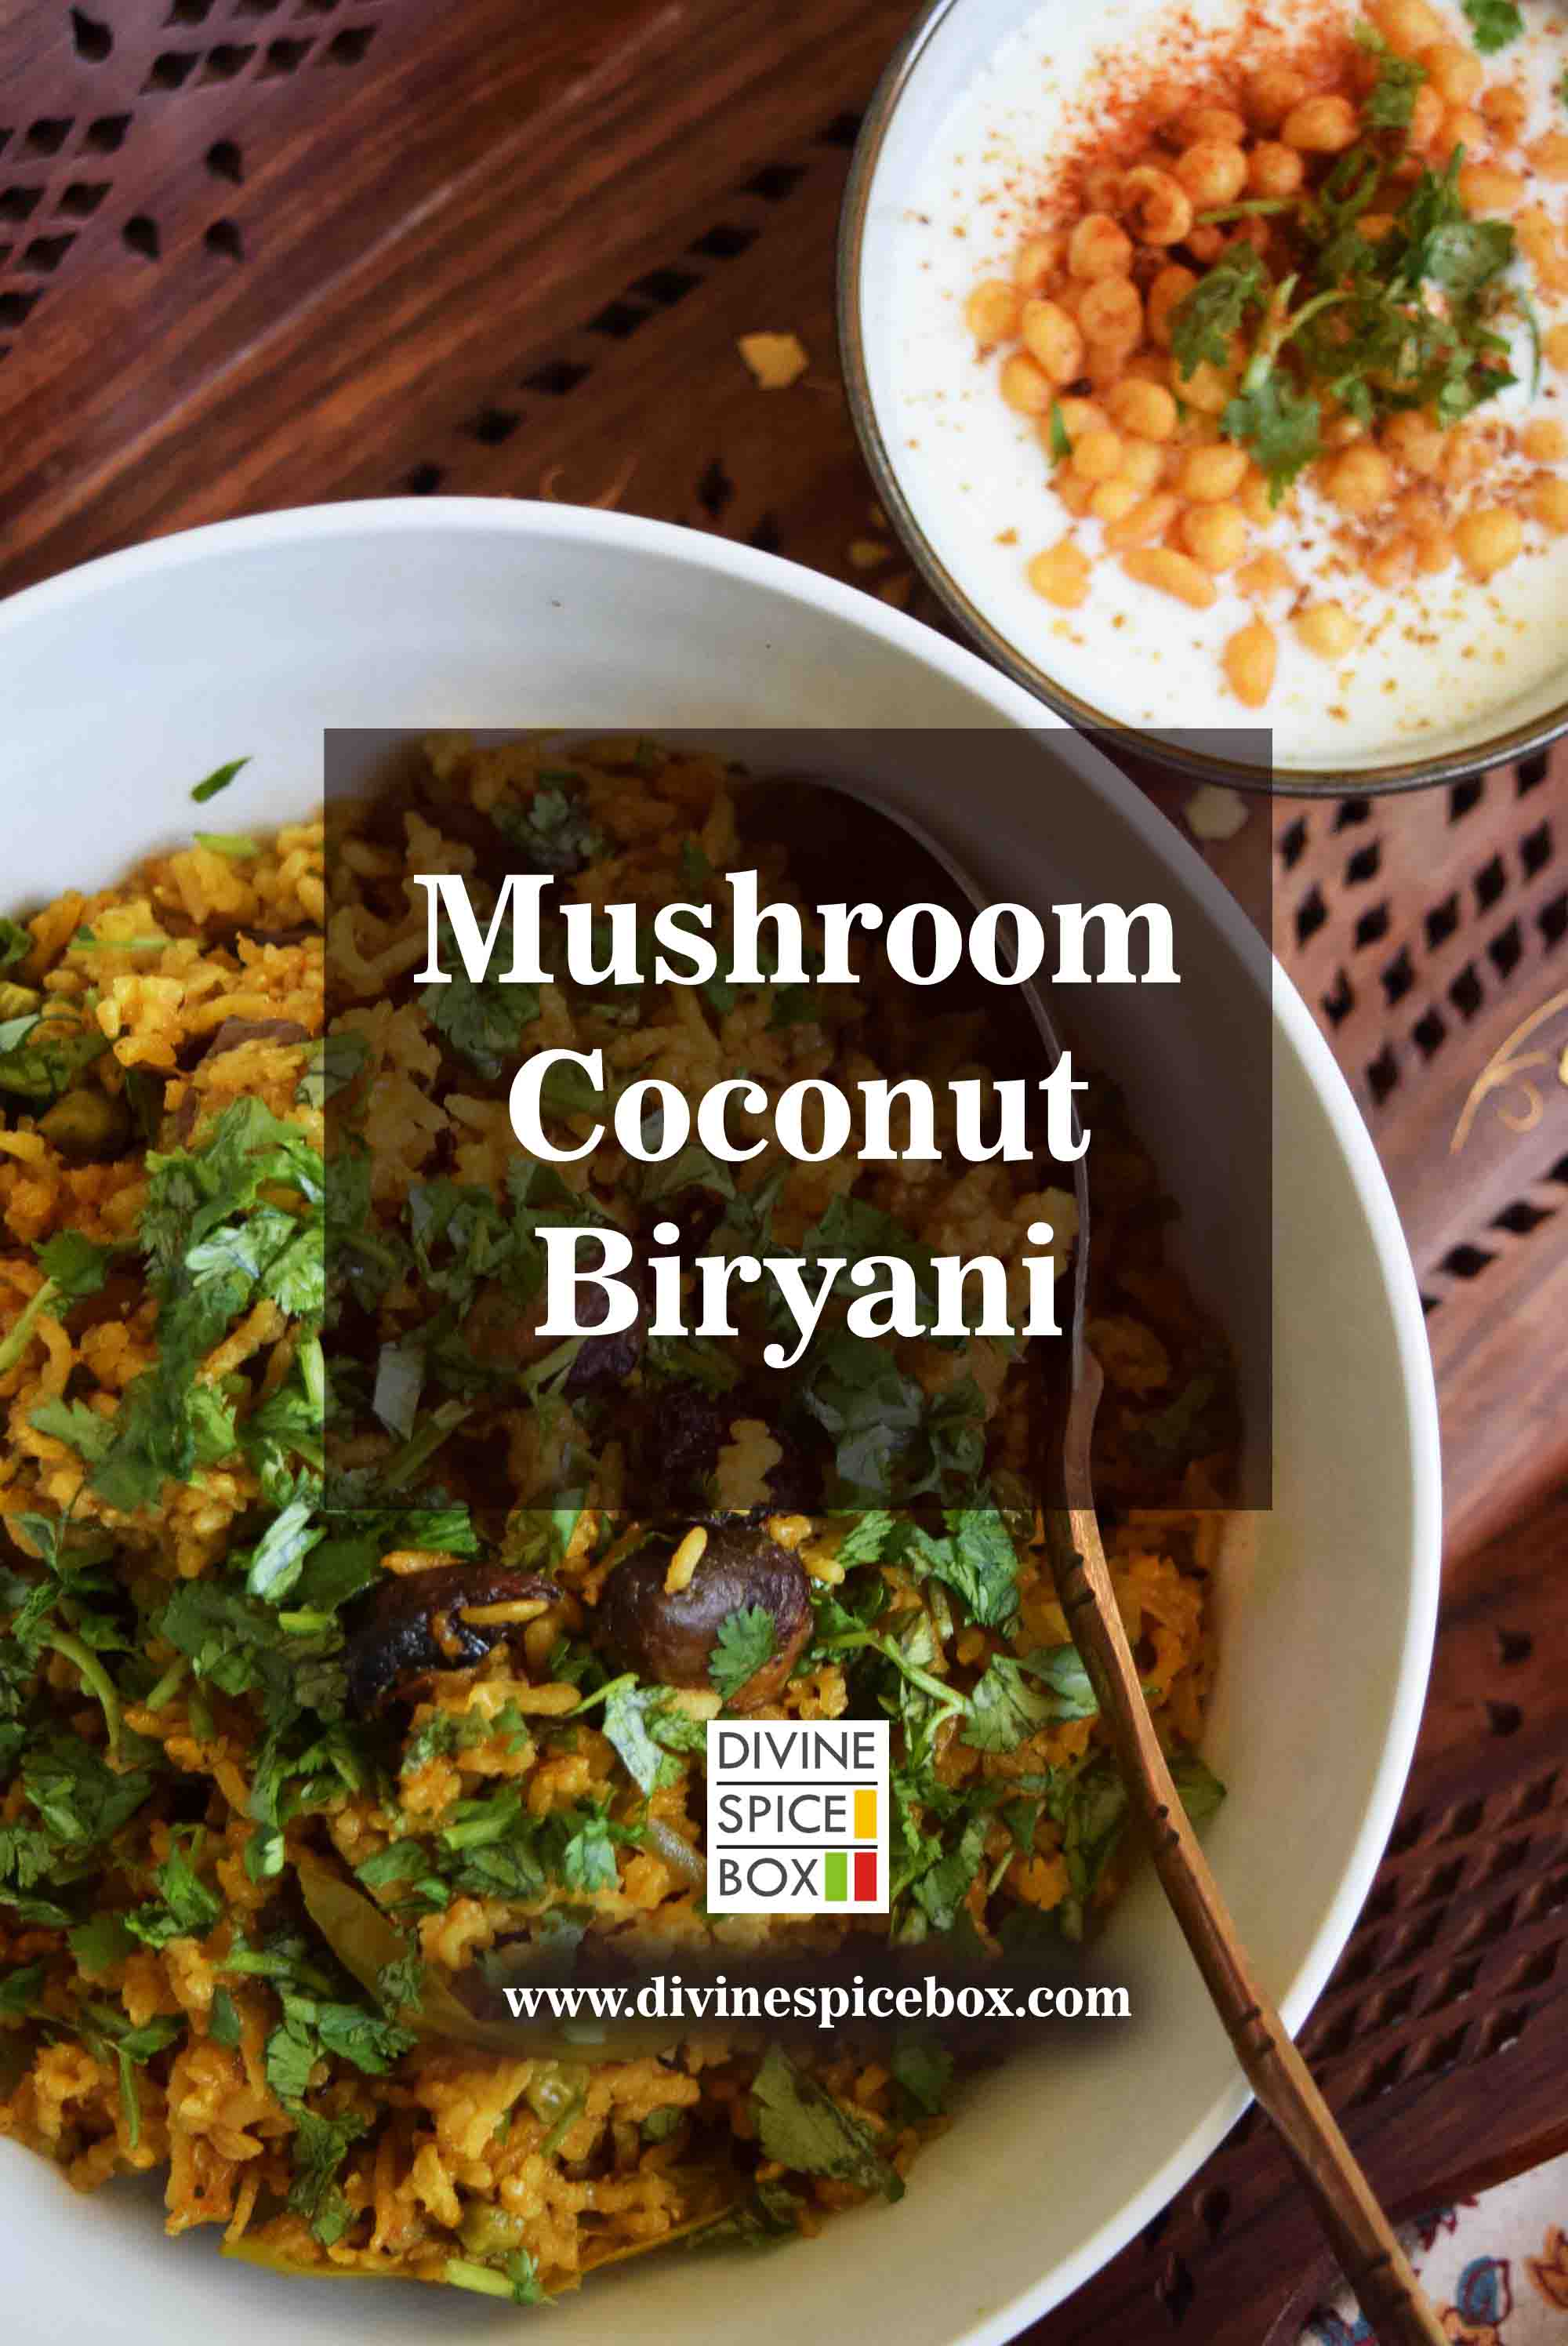 Mushroom Biryani